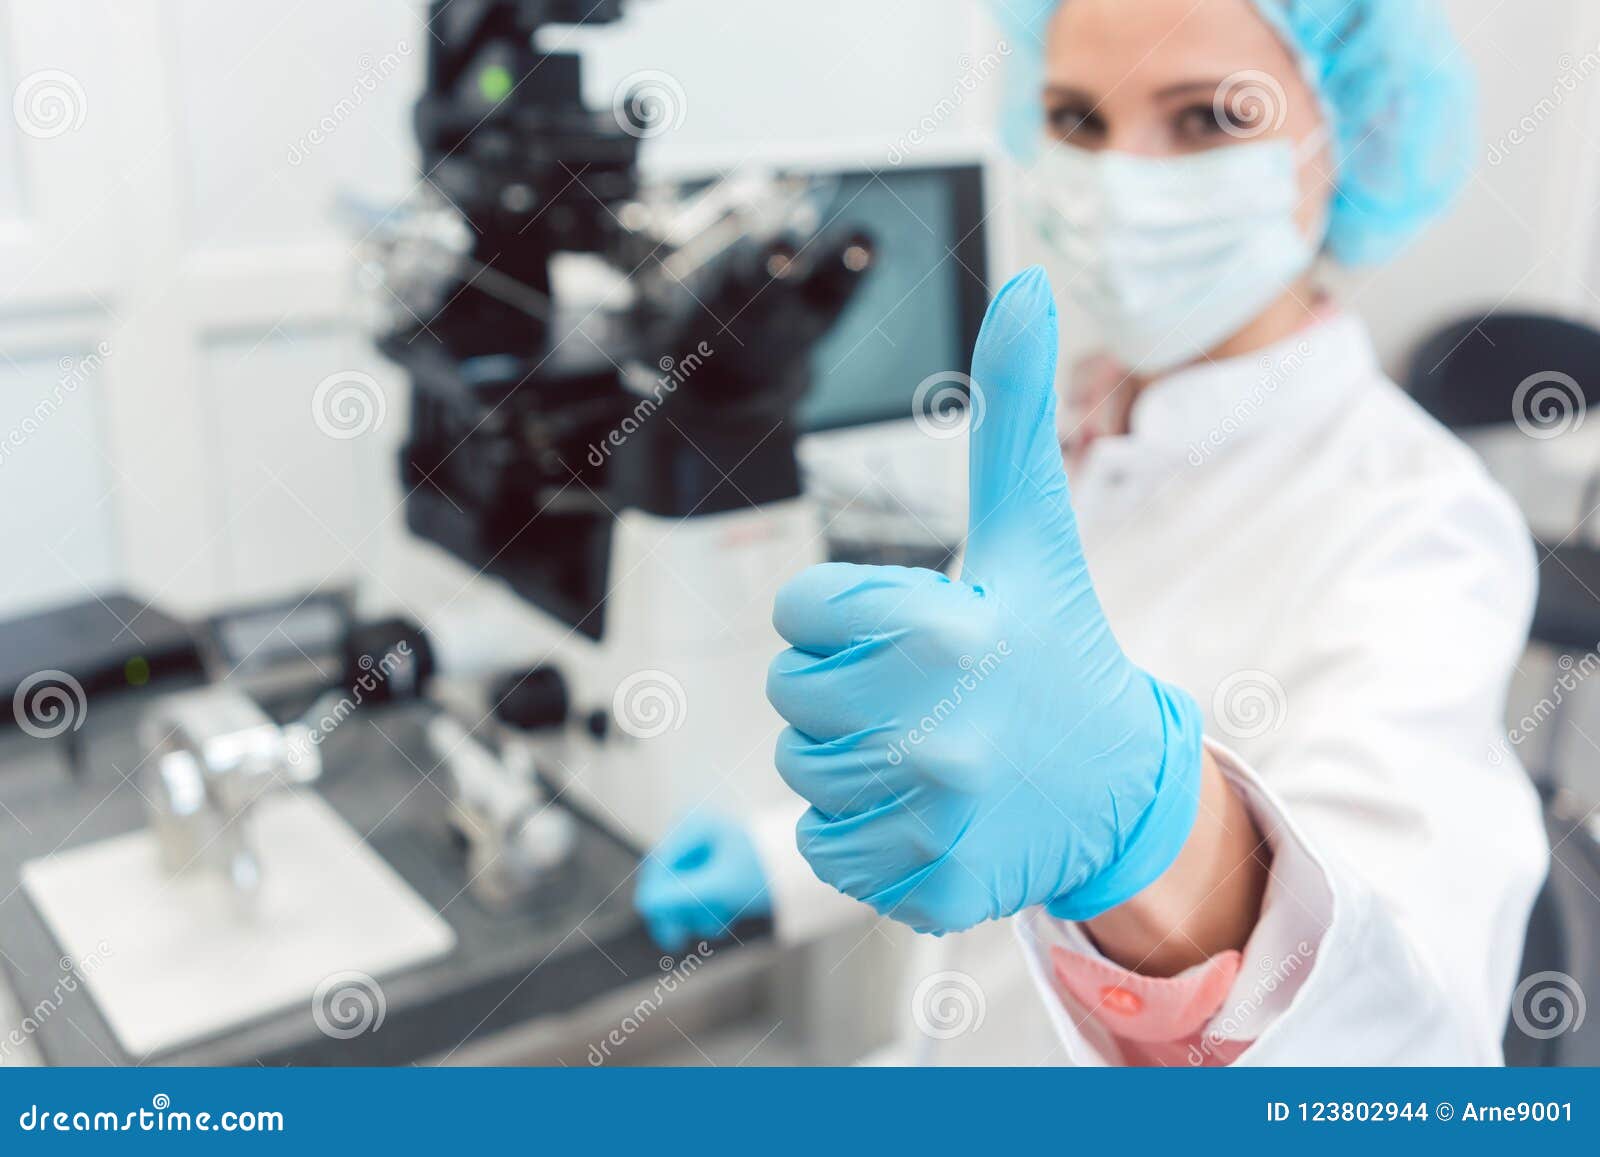 doctor in fertility lab having just fertilized a human egg